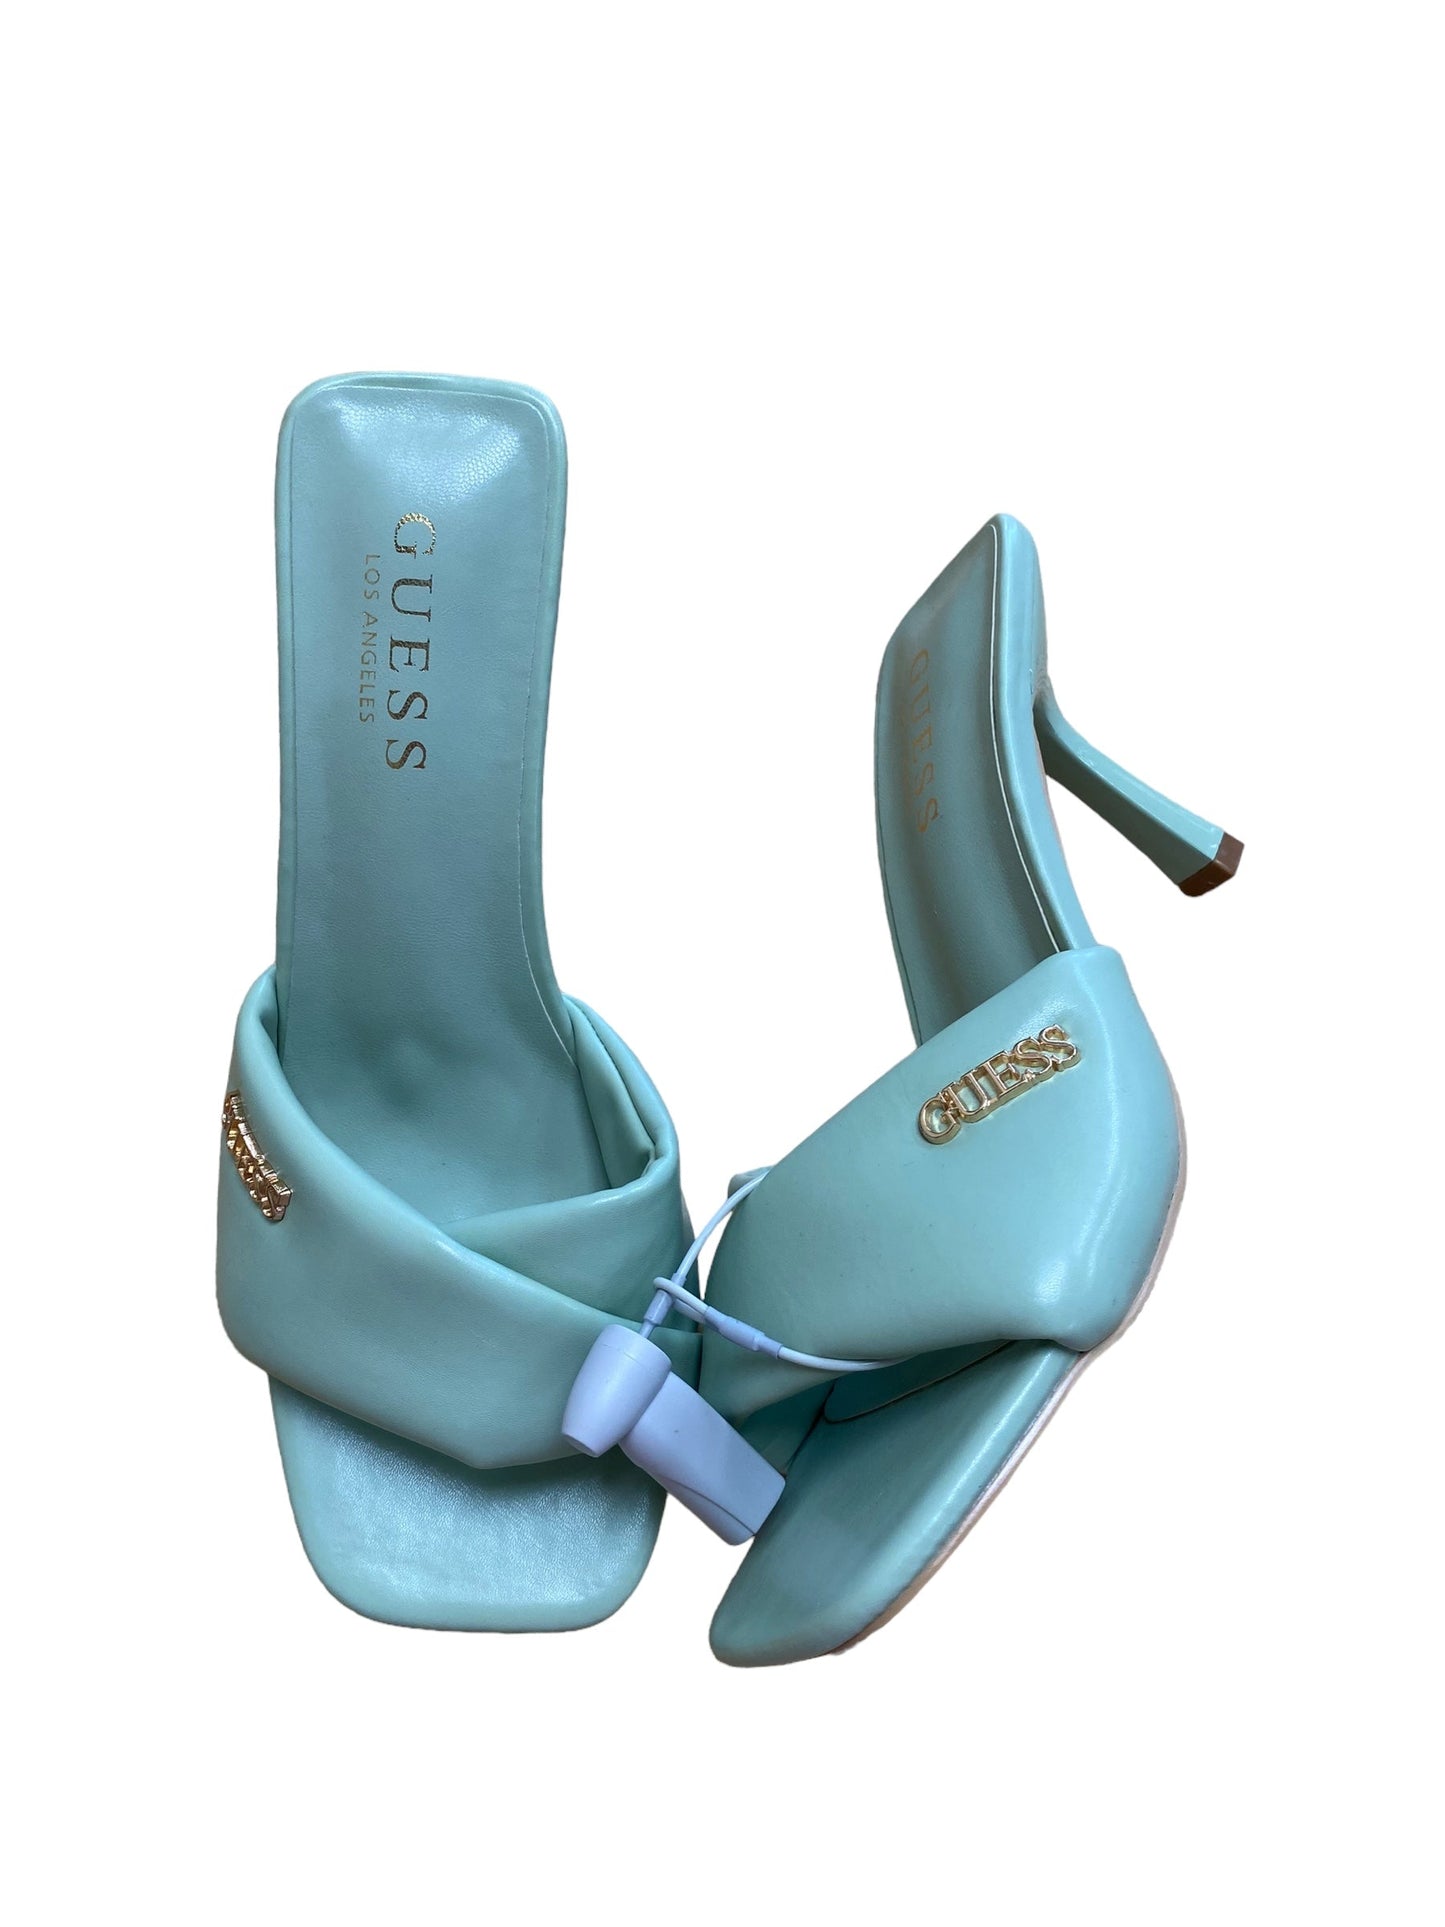 Blue Shoes Heels Stiletto Guess, Size 6.5